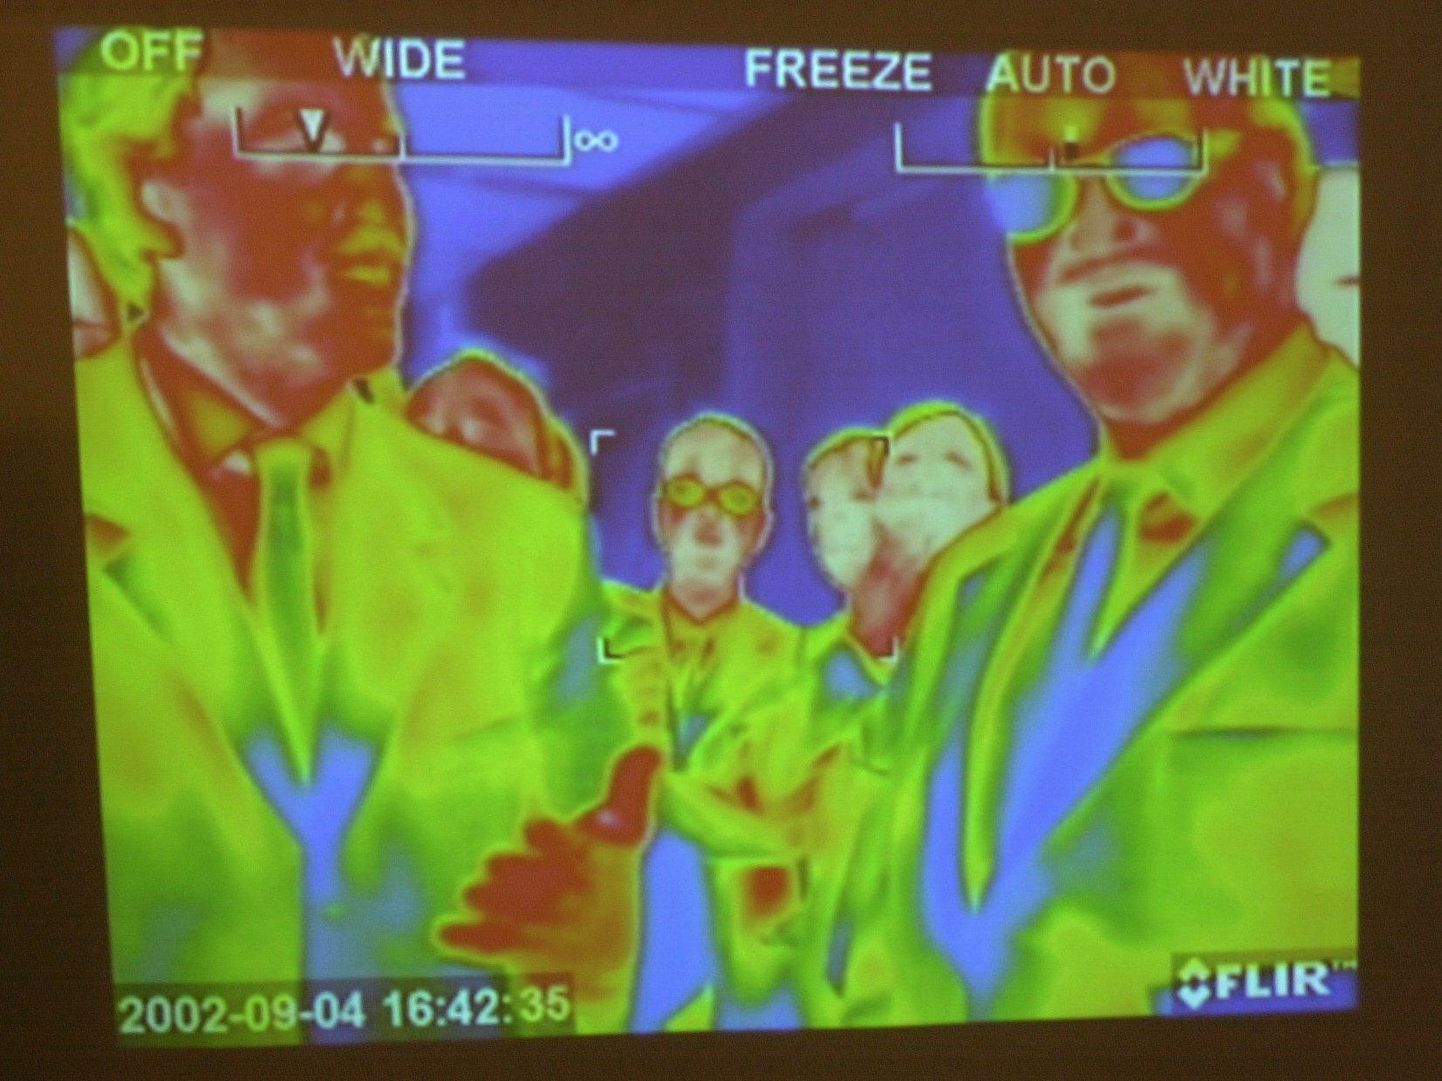 Göran Persson ja Tony Blair nähtuna läbi FLIR soojuskaamera